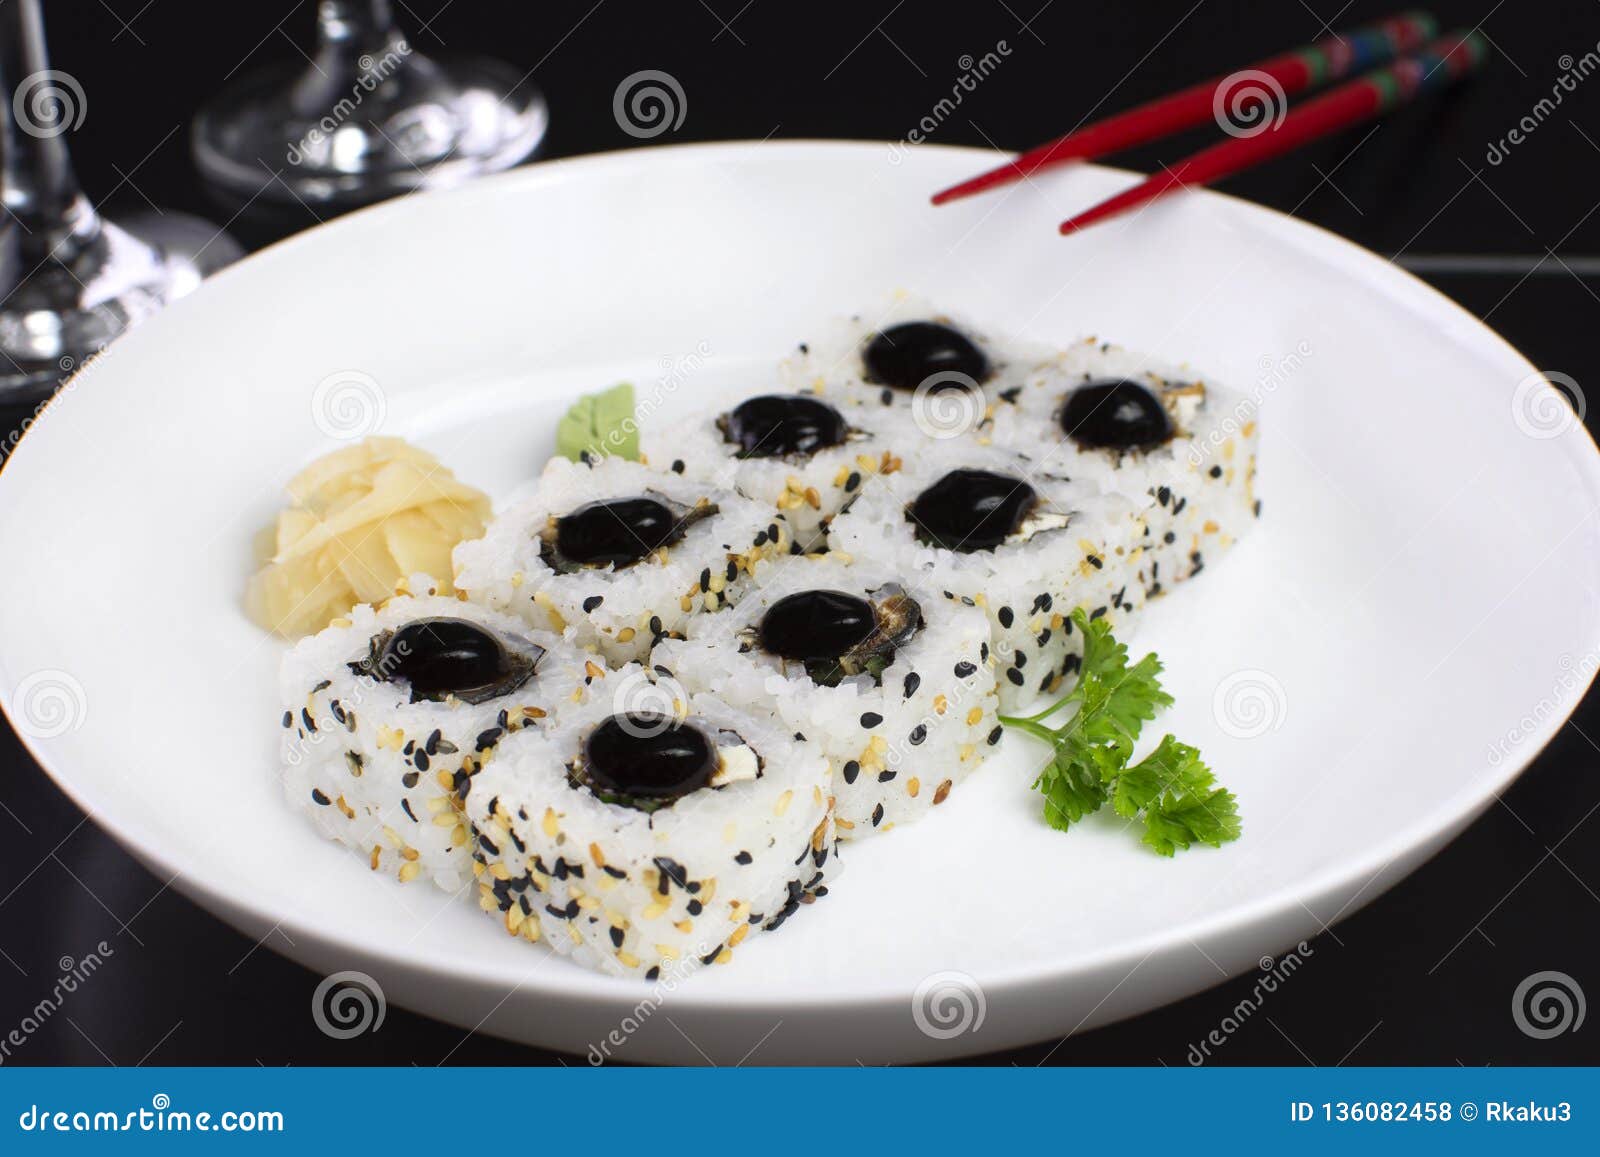 uramaki skin in a plate on a restaurante table